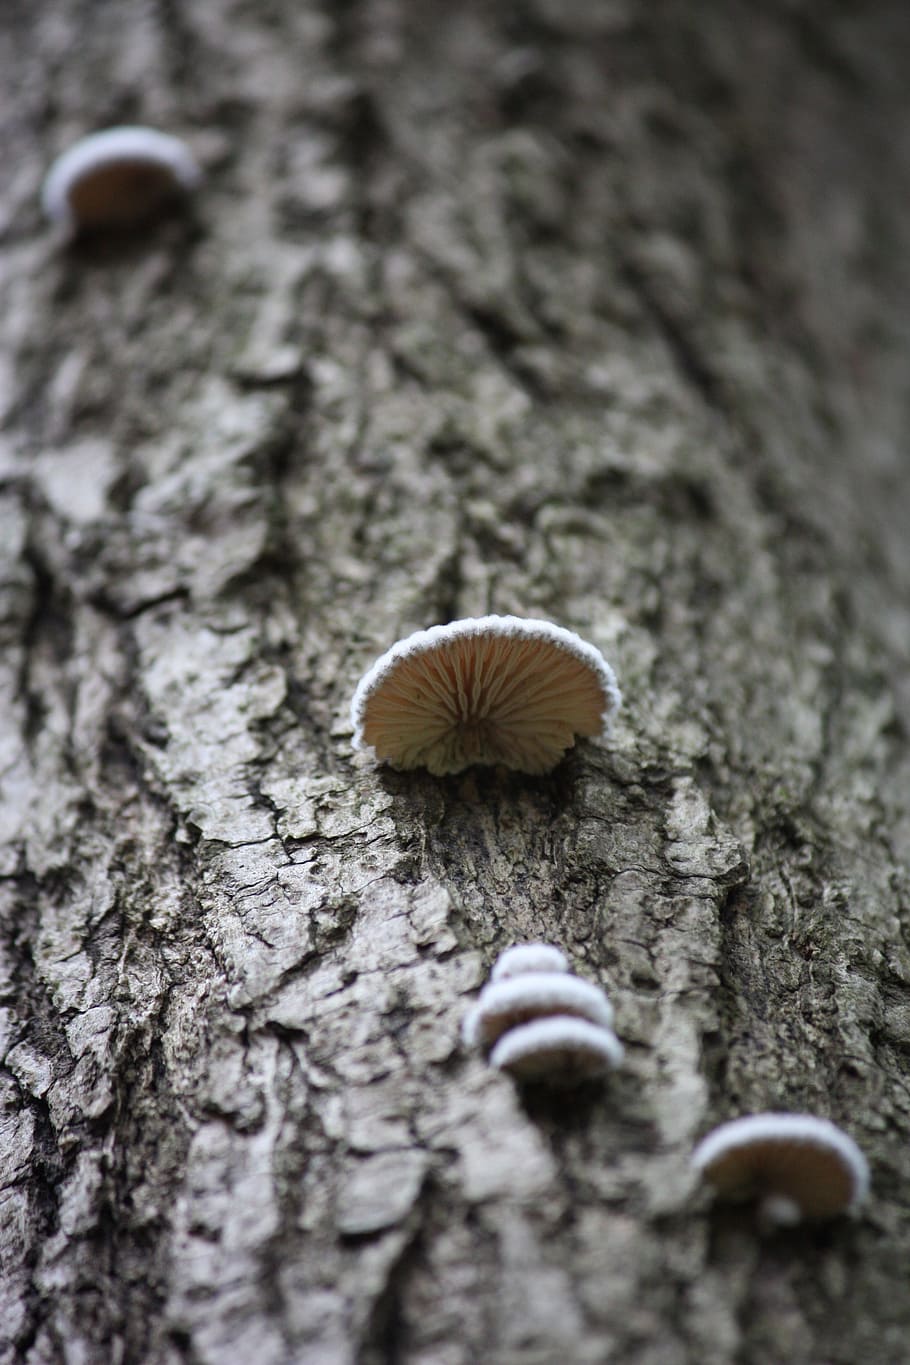 fungus, wood, mushroom wild rice, nature, selective focus, close-up, tree trunk, textured, trunk, invertebrate